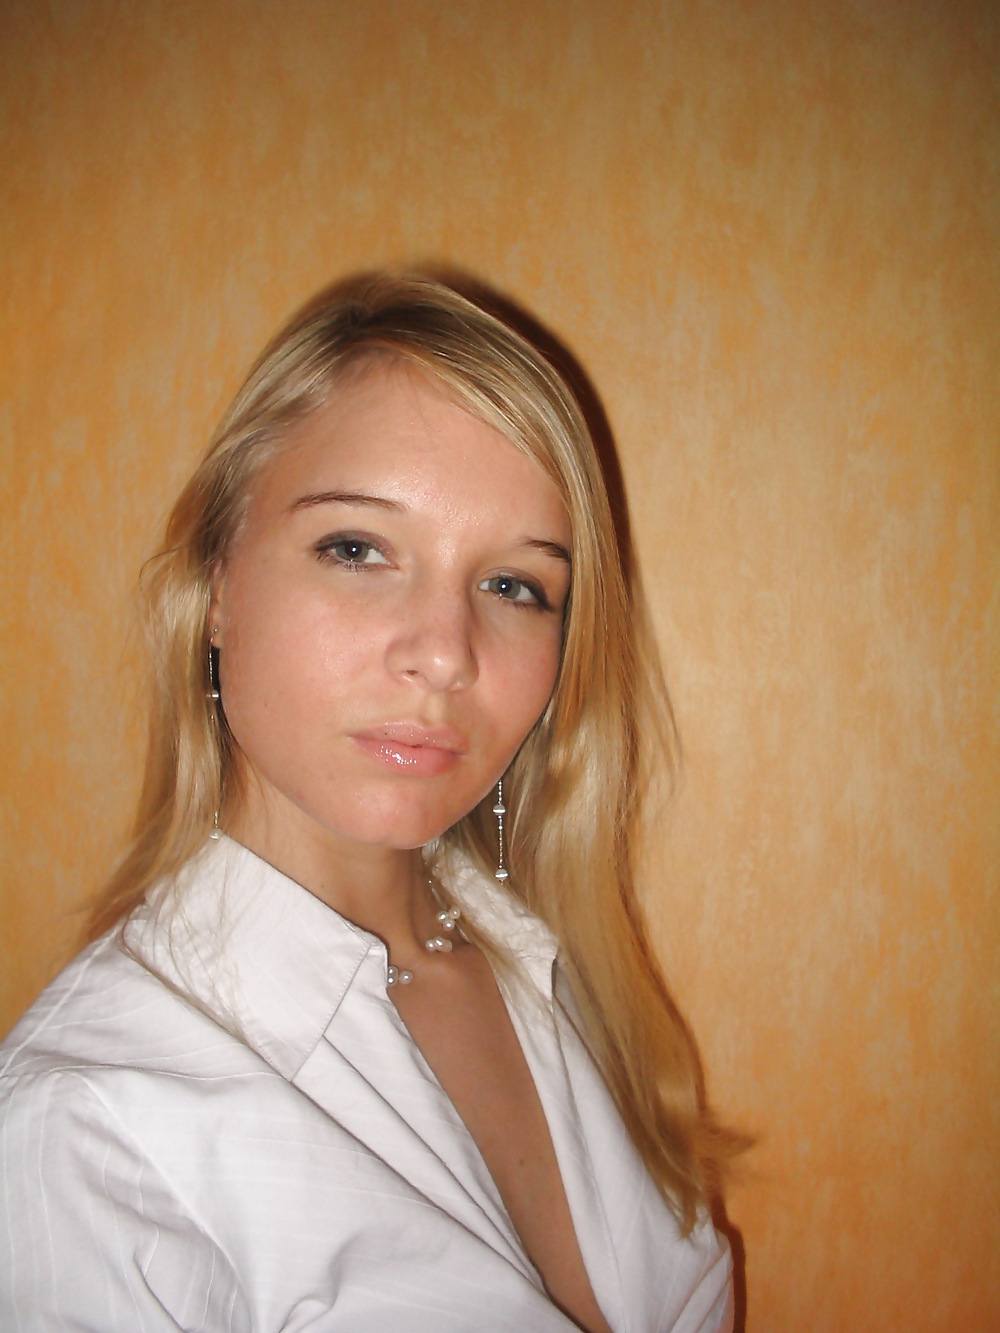 Hot ex ragazza russa teenager
 #7485030